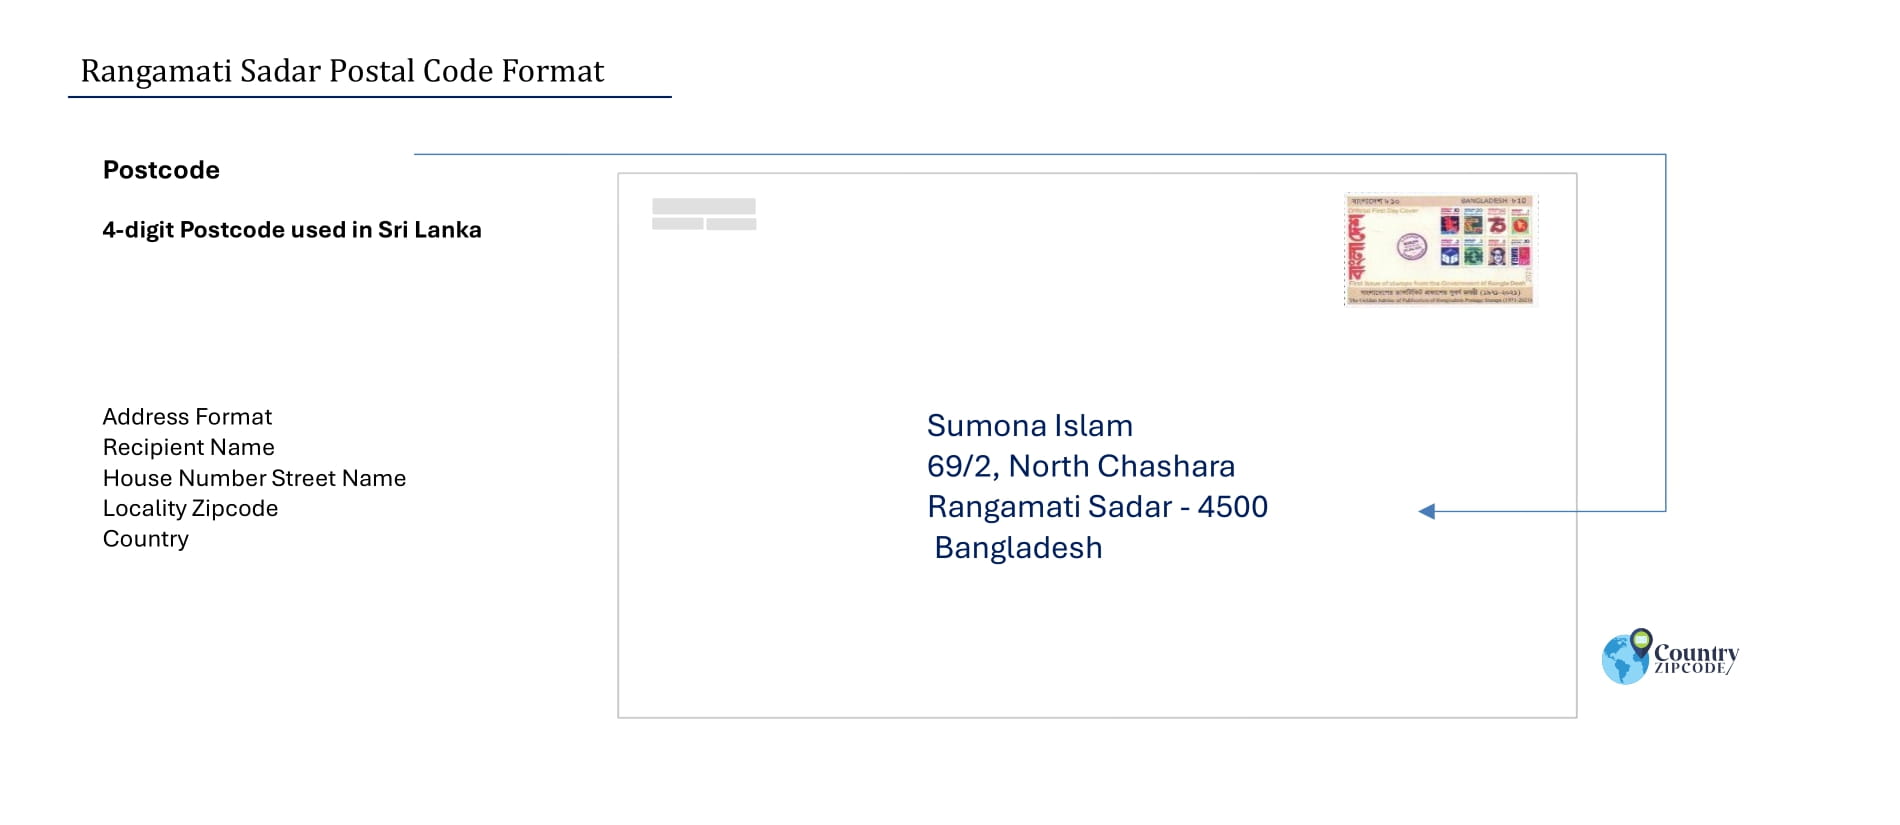 Rangamati Sadar Postal code format